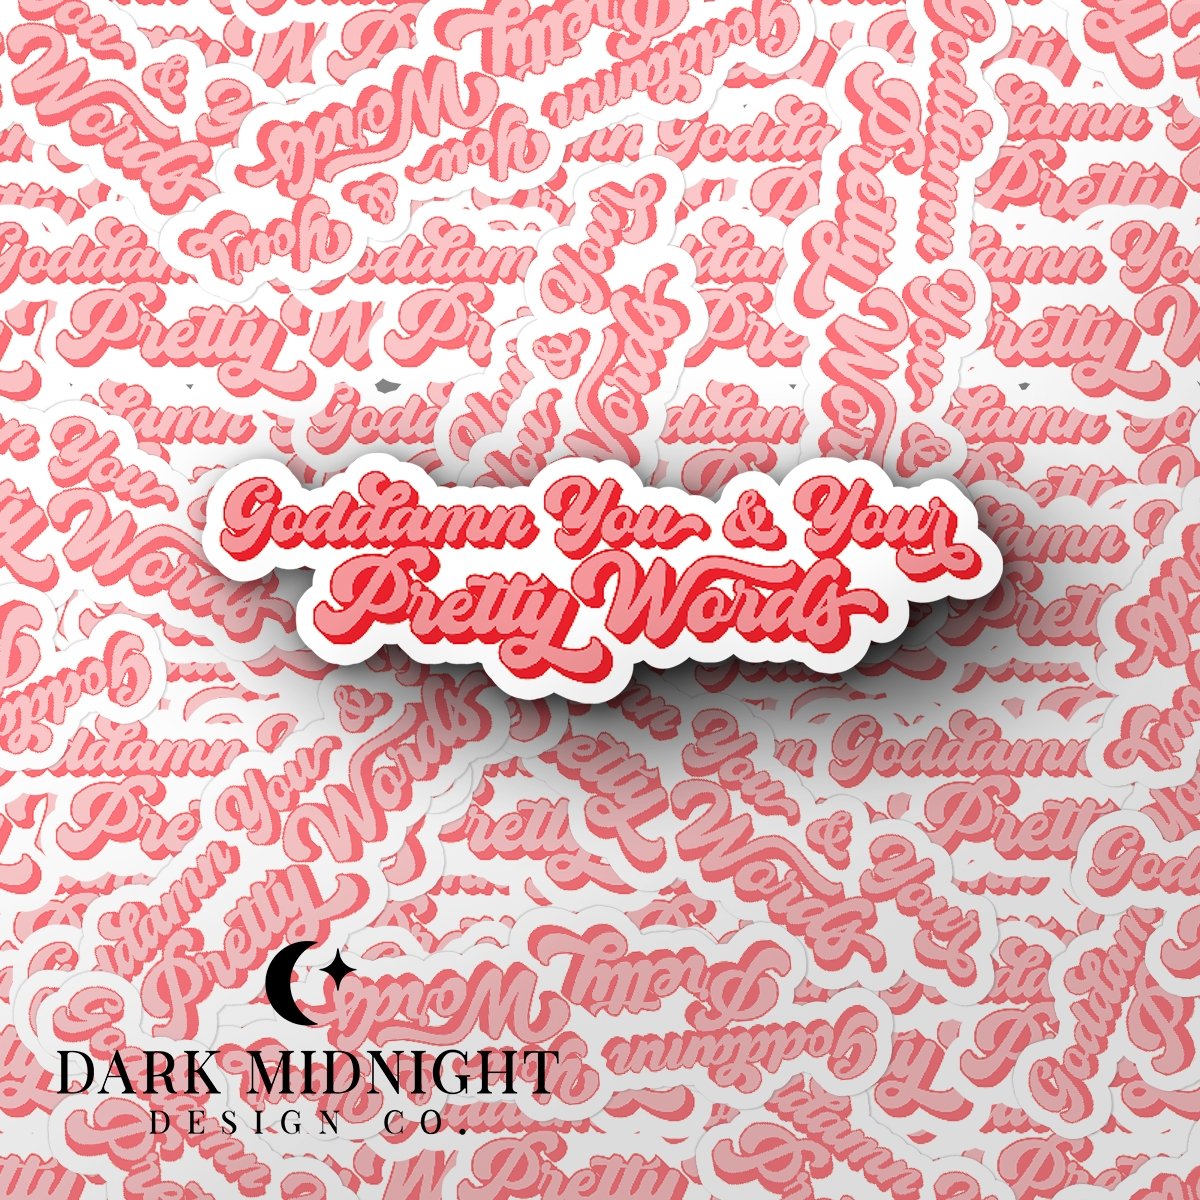 Goddamn You And Your Pretty Words - Darius Acrux Quote - Officially Licensed Zodiac Academy Sticker - Dark Midnight Design Co